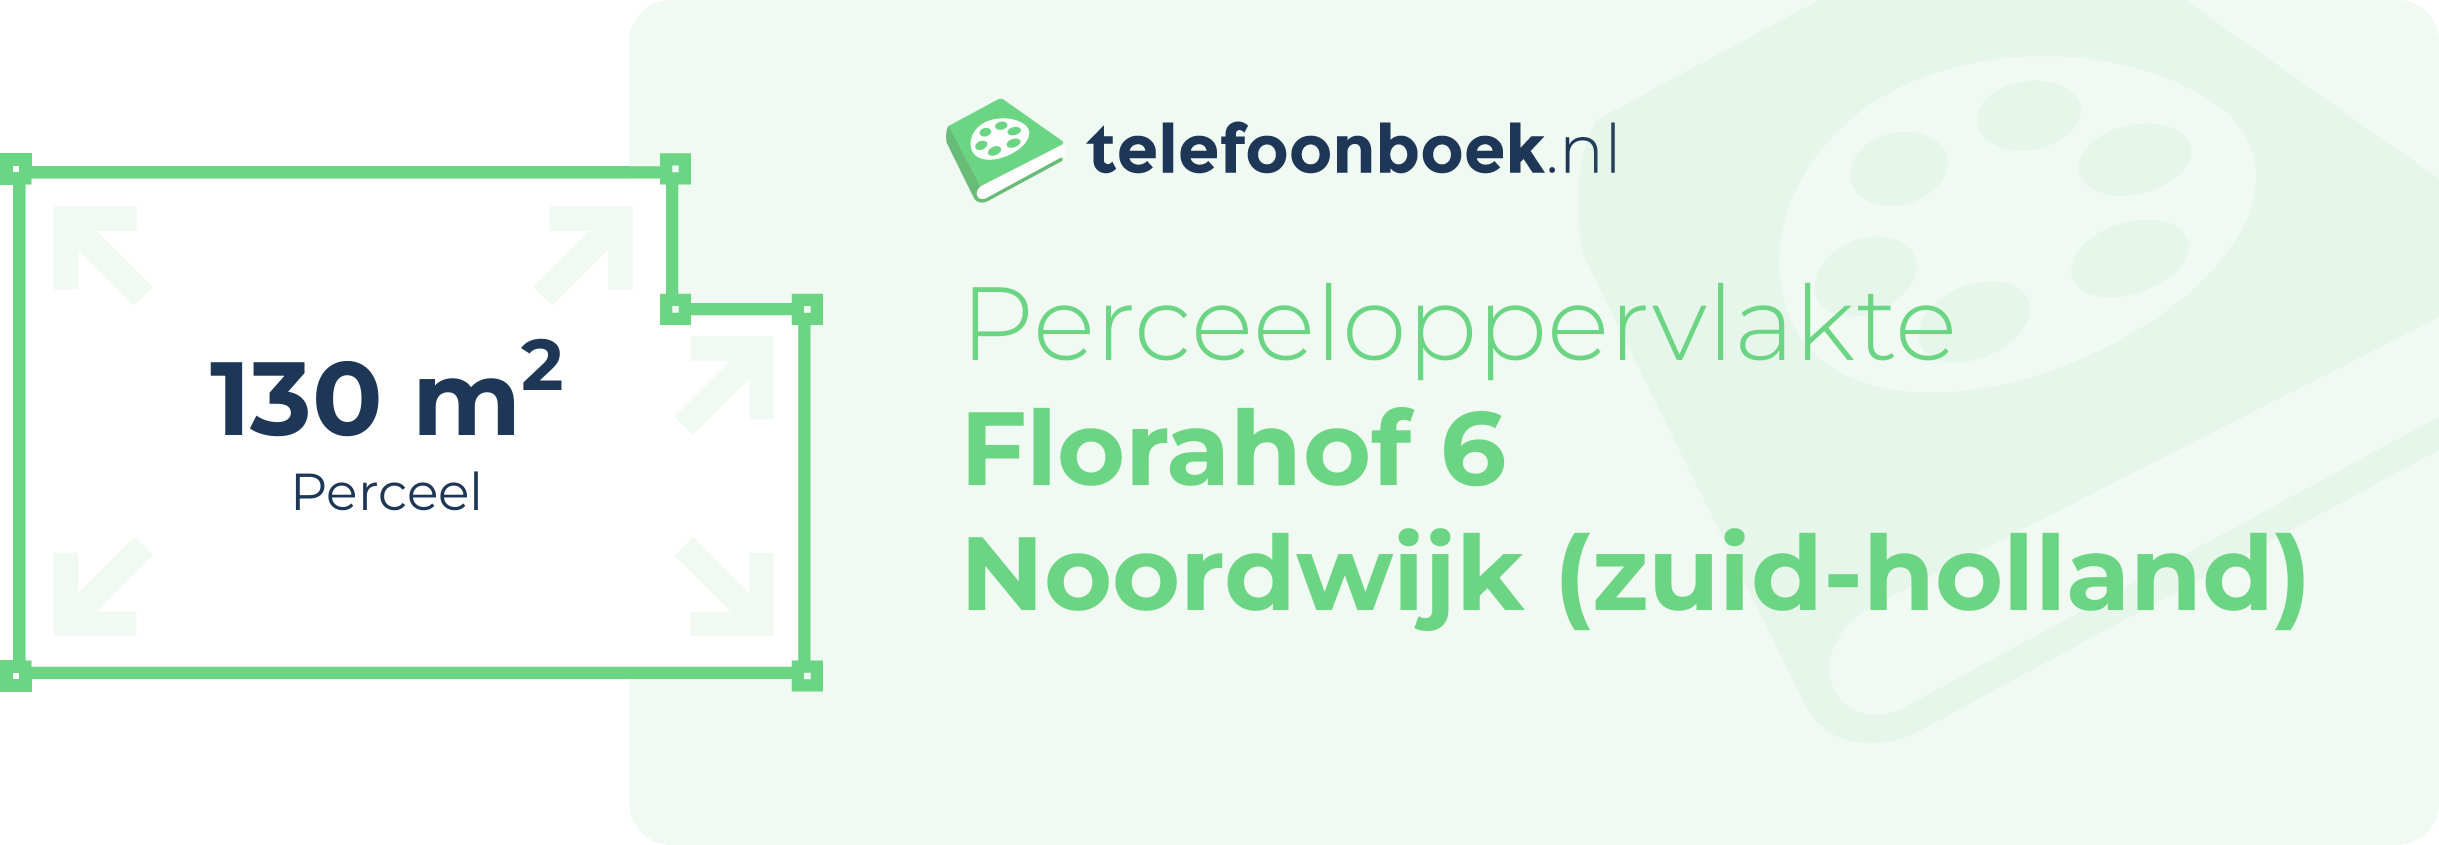 Perceeloppervlakte Florahof 6 Noordwijk (Zuid-Holland)